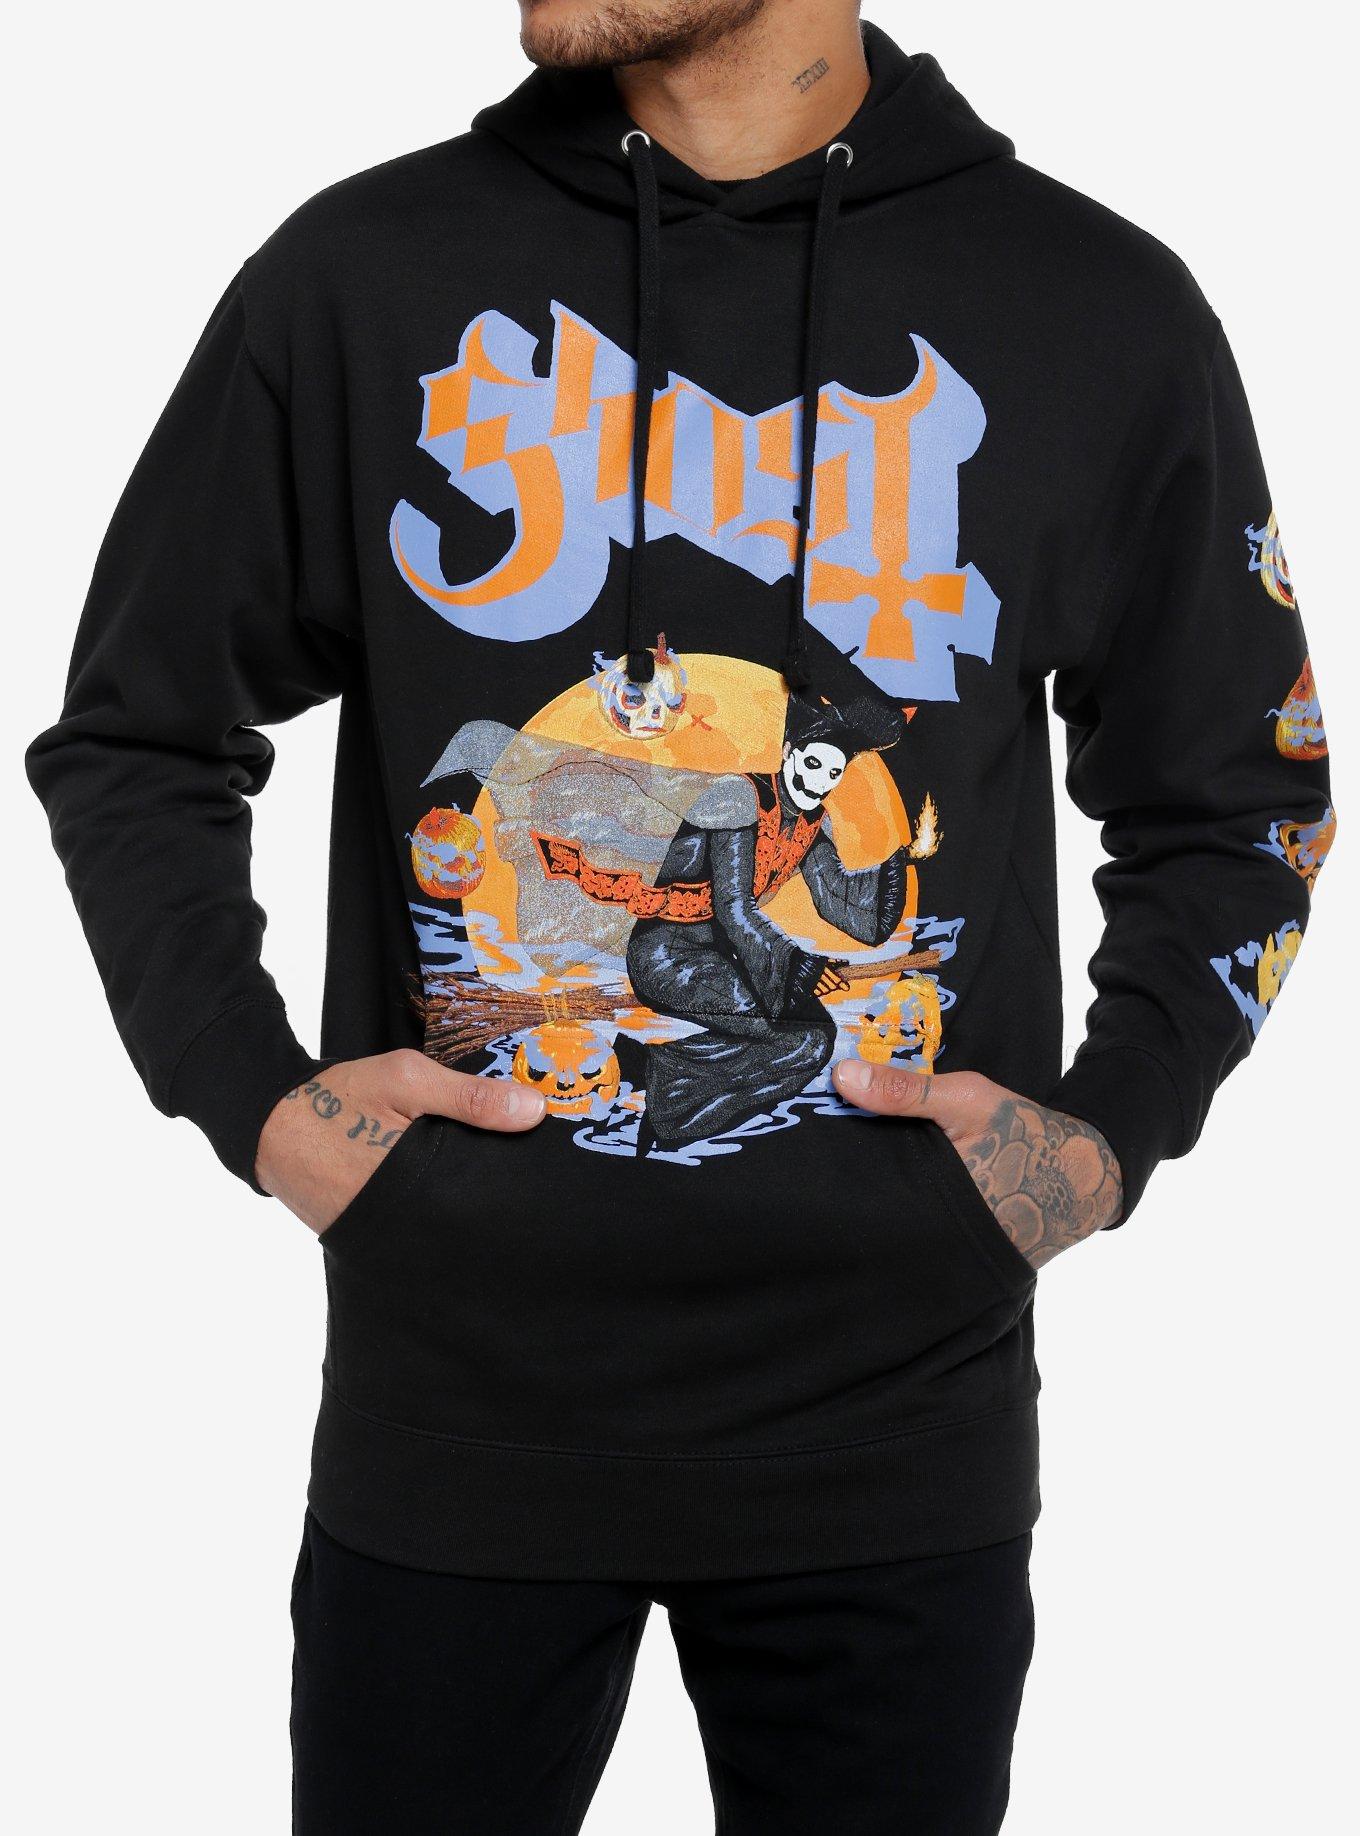 Ghost Band Shirt, Trendy Sweater Unisex Hoodie